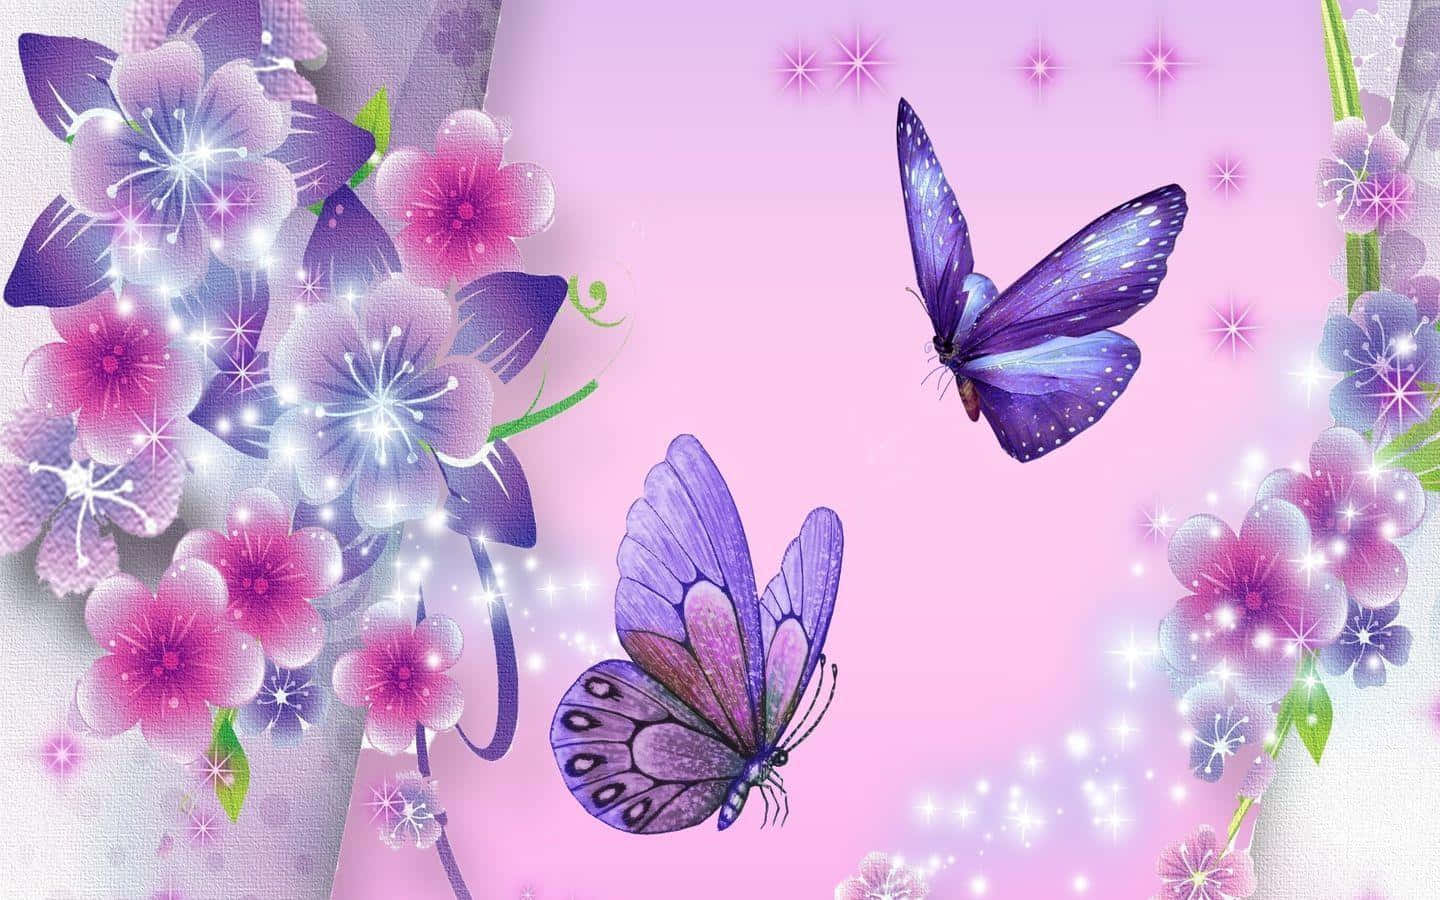 Glitter Butterfly wallpaper by NikkiFrohloff  Download on ZEDGE  b72f